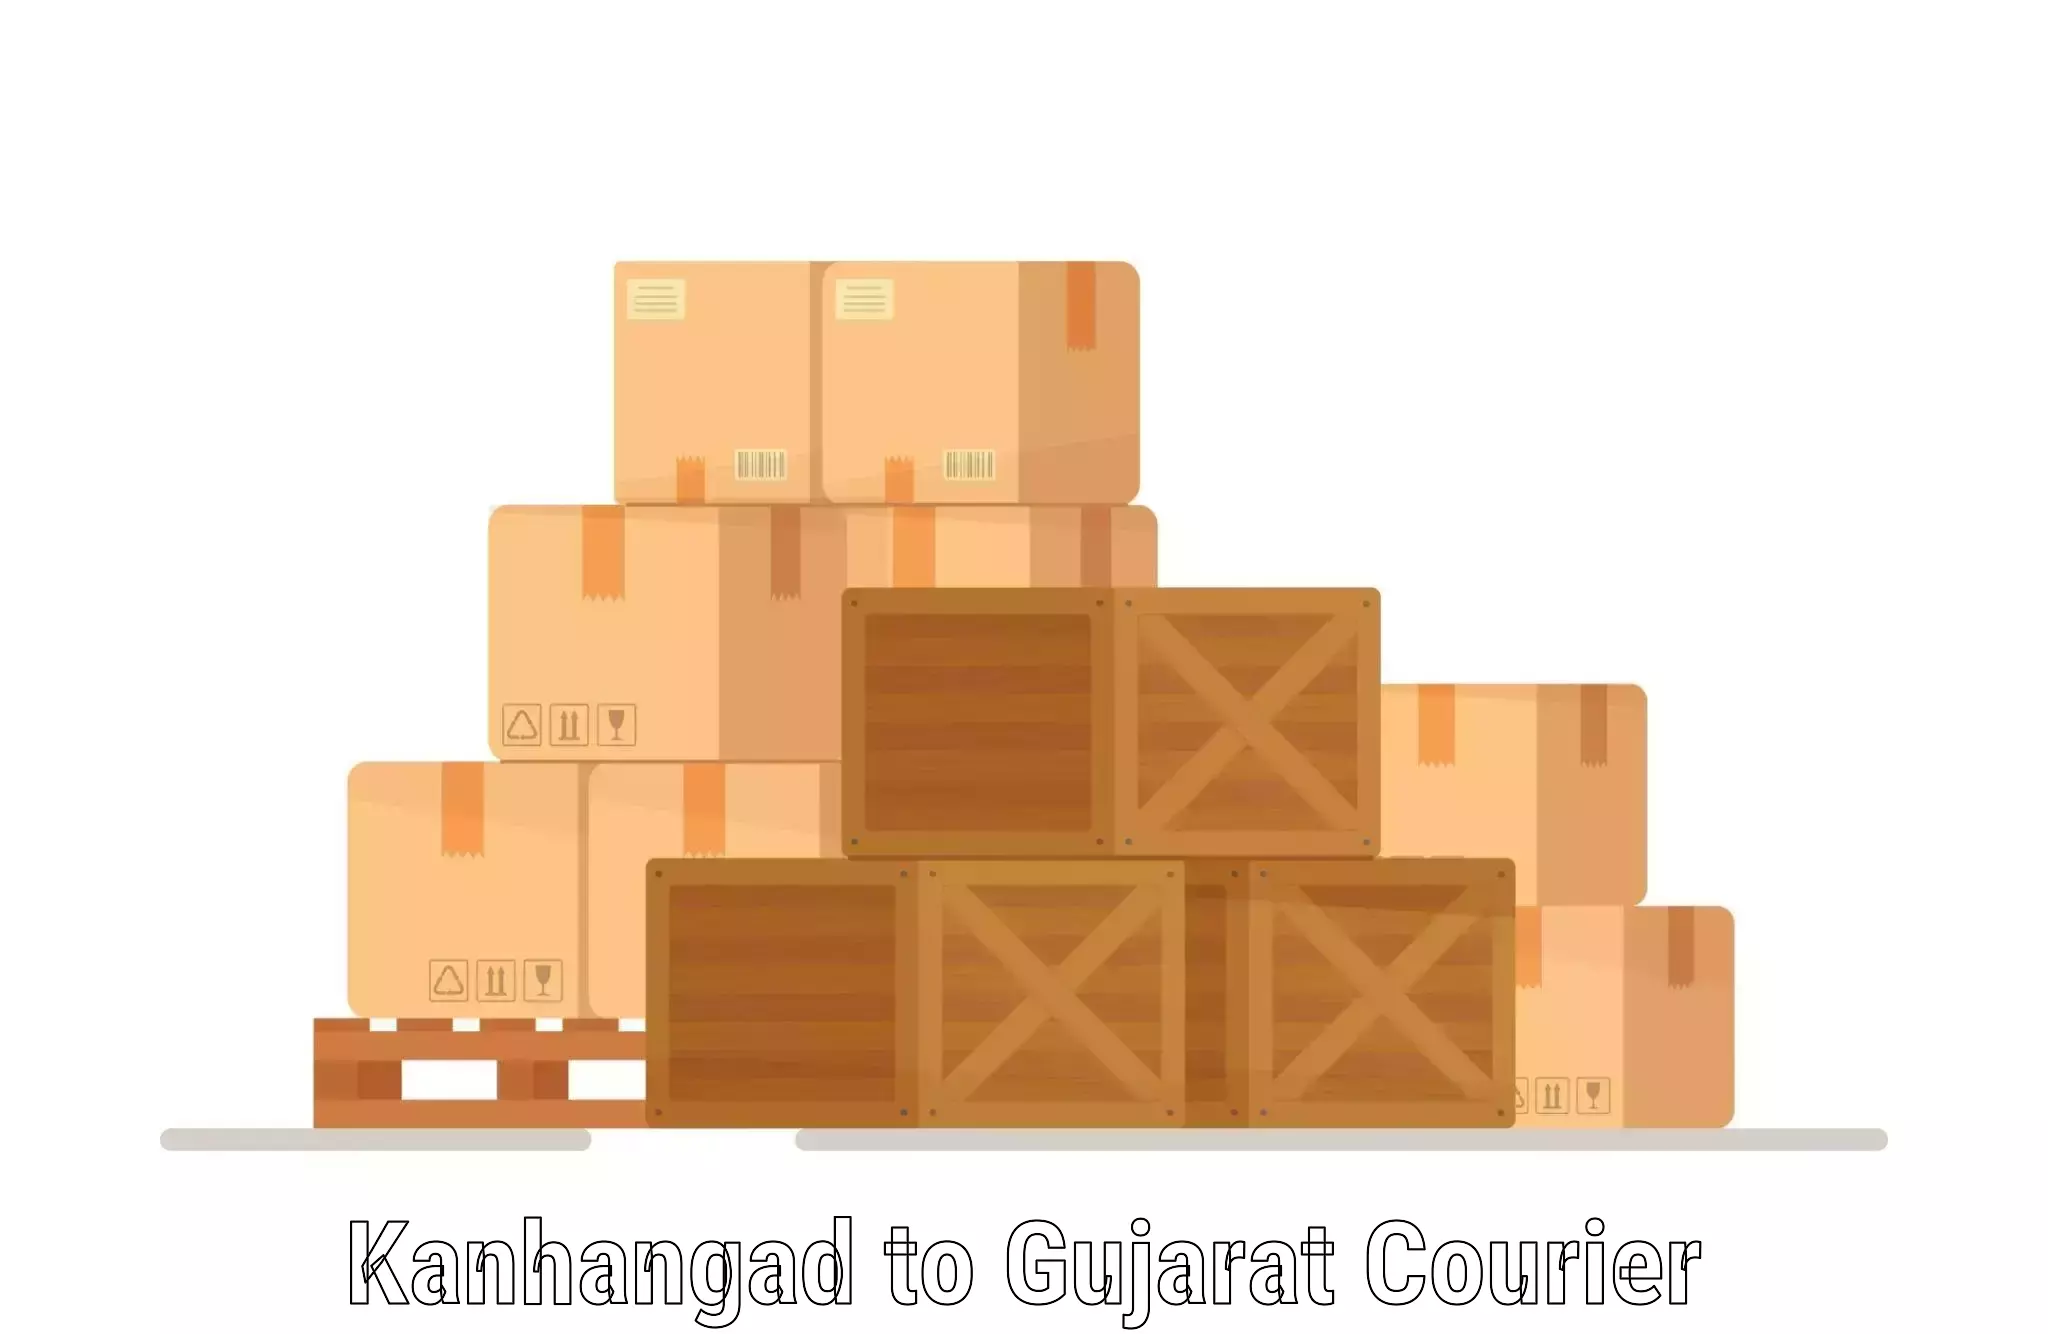 Global logistics network Kanhangad to Vijapur